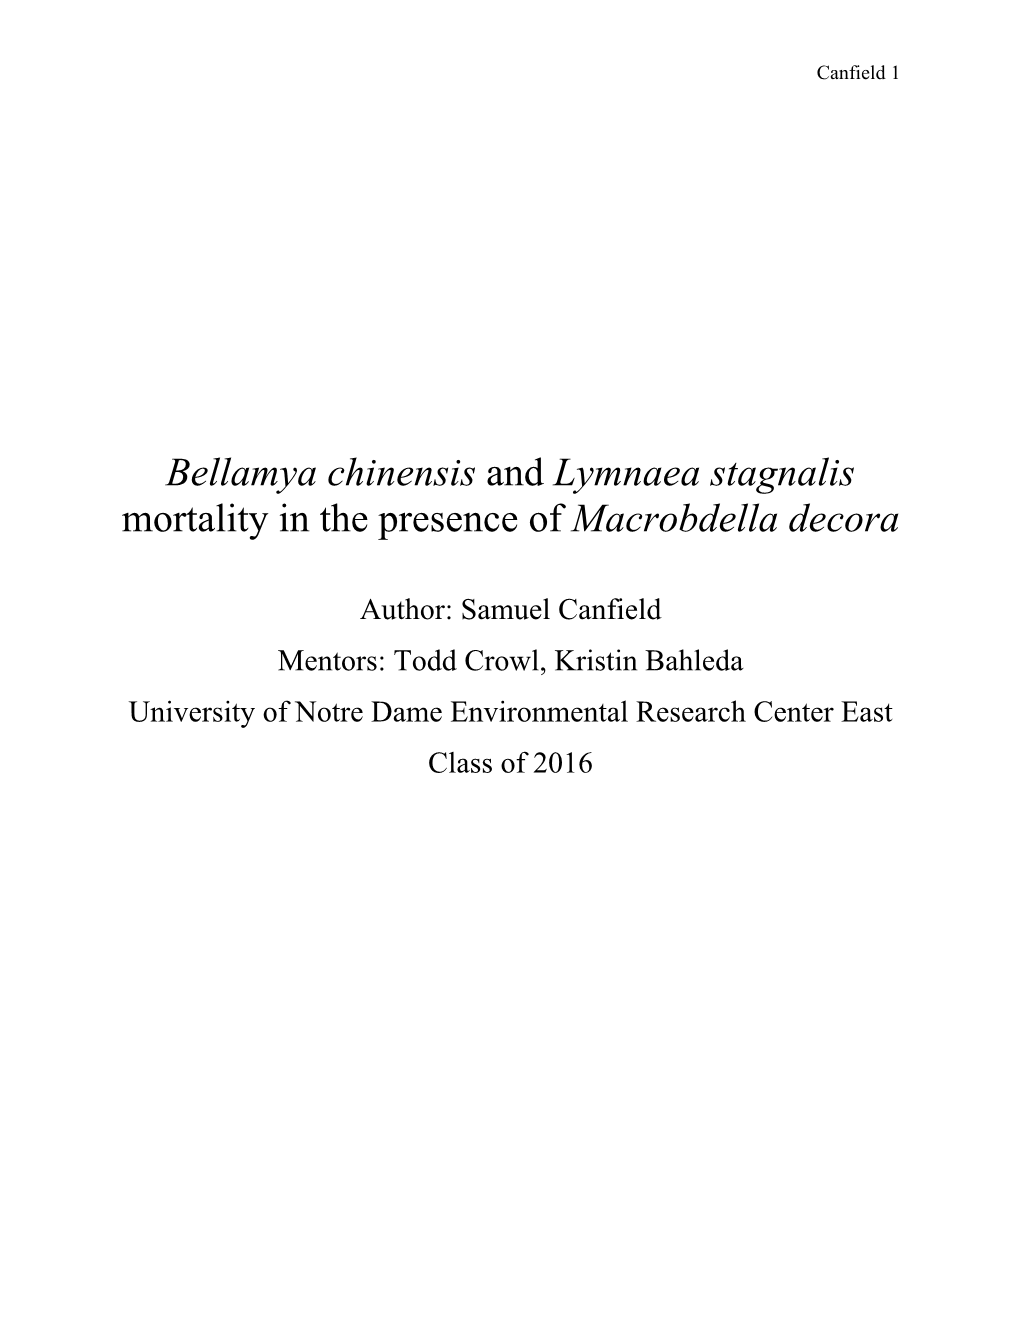 Bellamya Chinensis and Lymnaea Stagnalis Mortality in the Presence of Macrobdella Decora